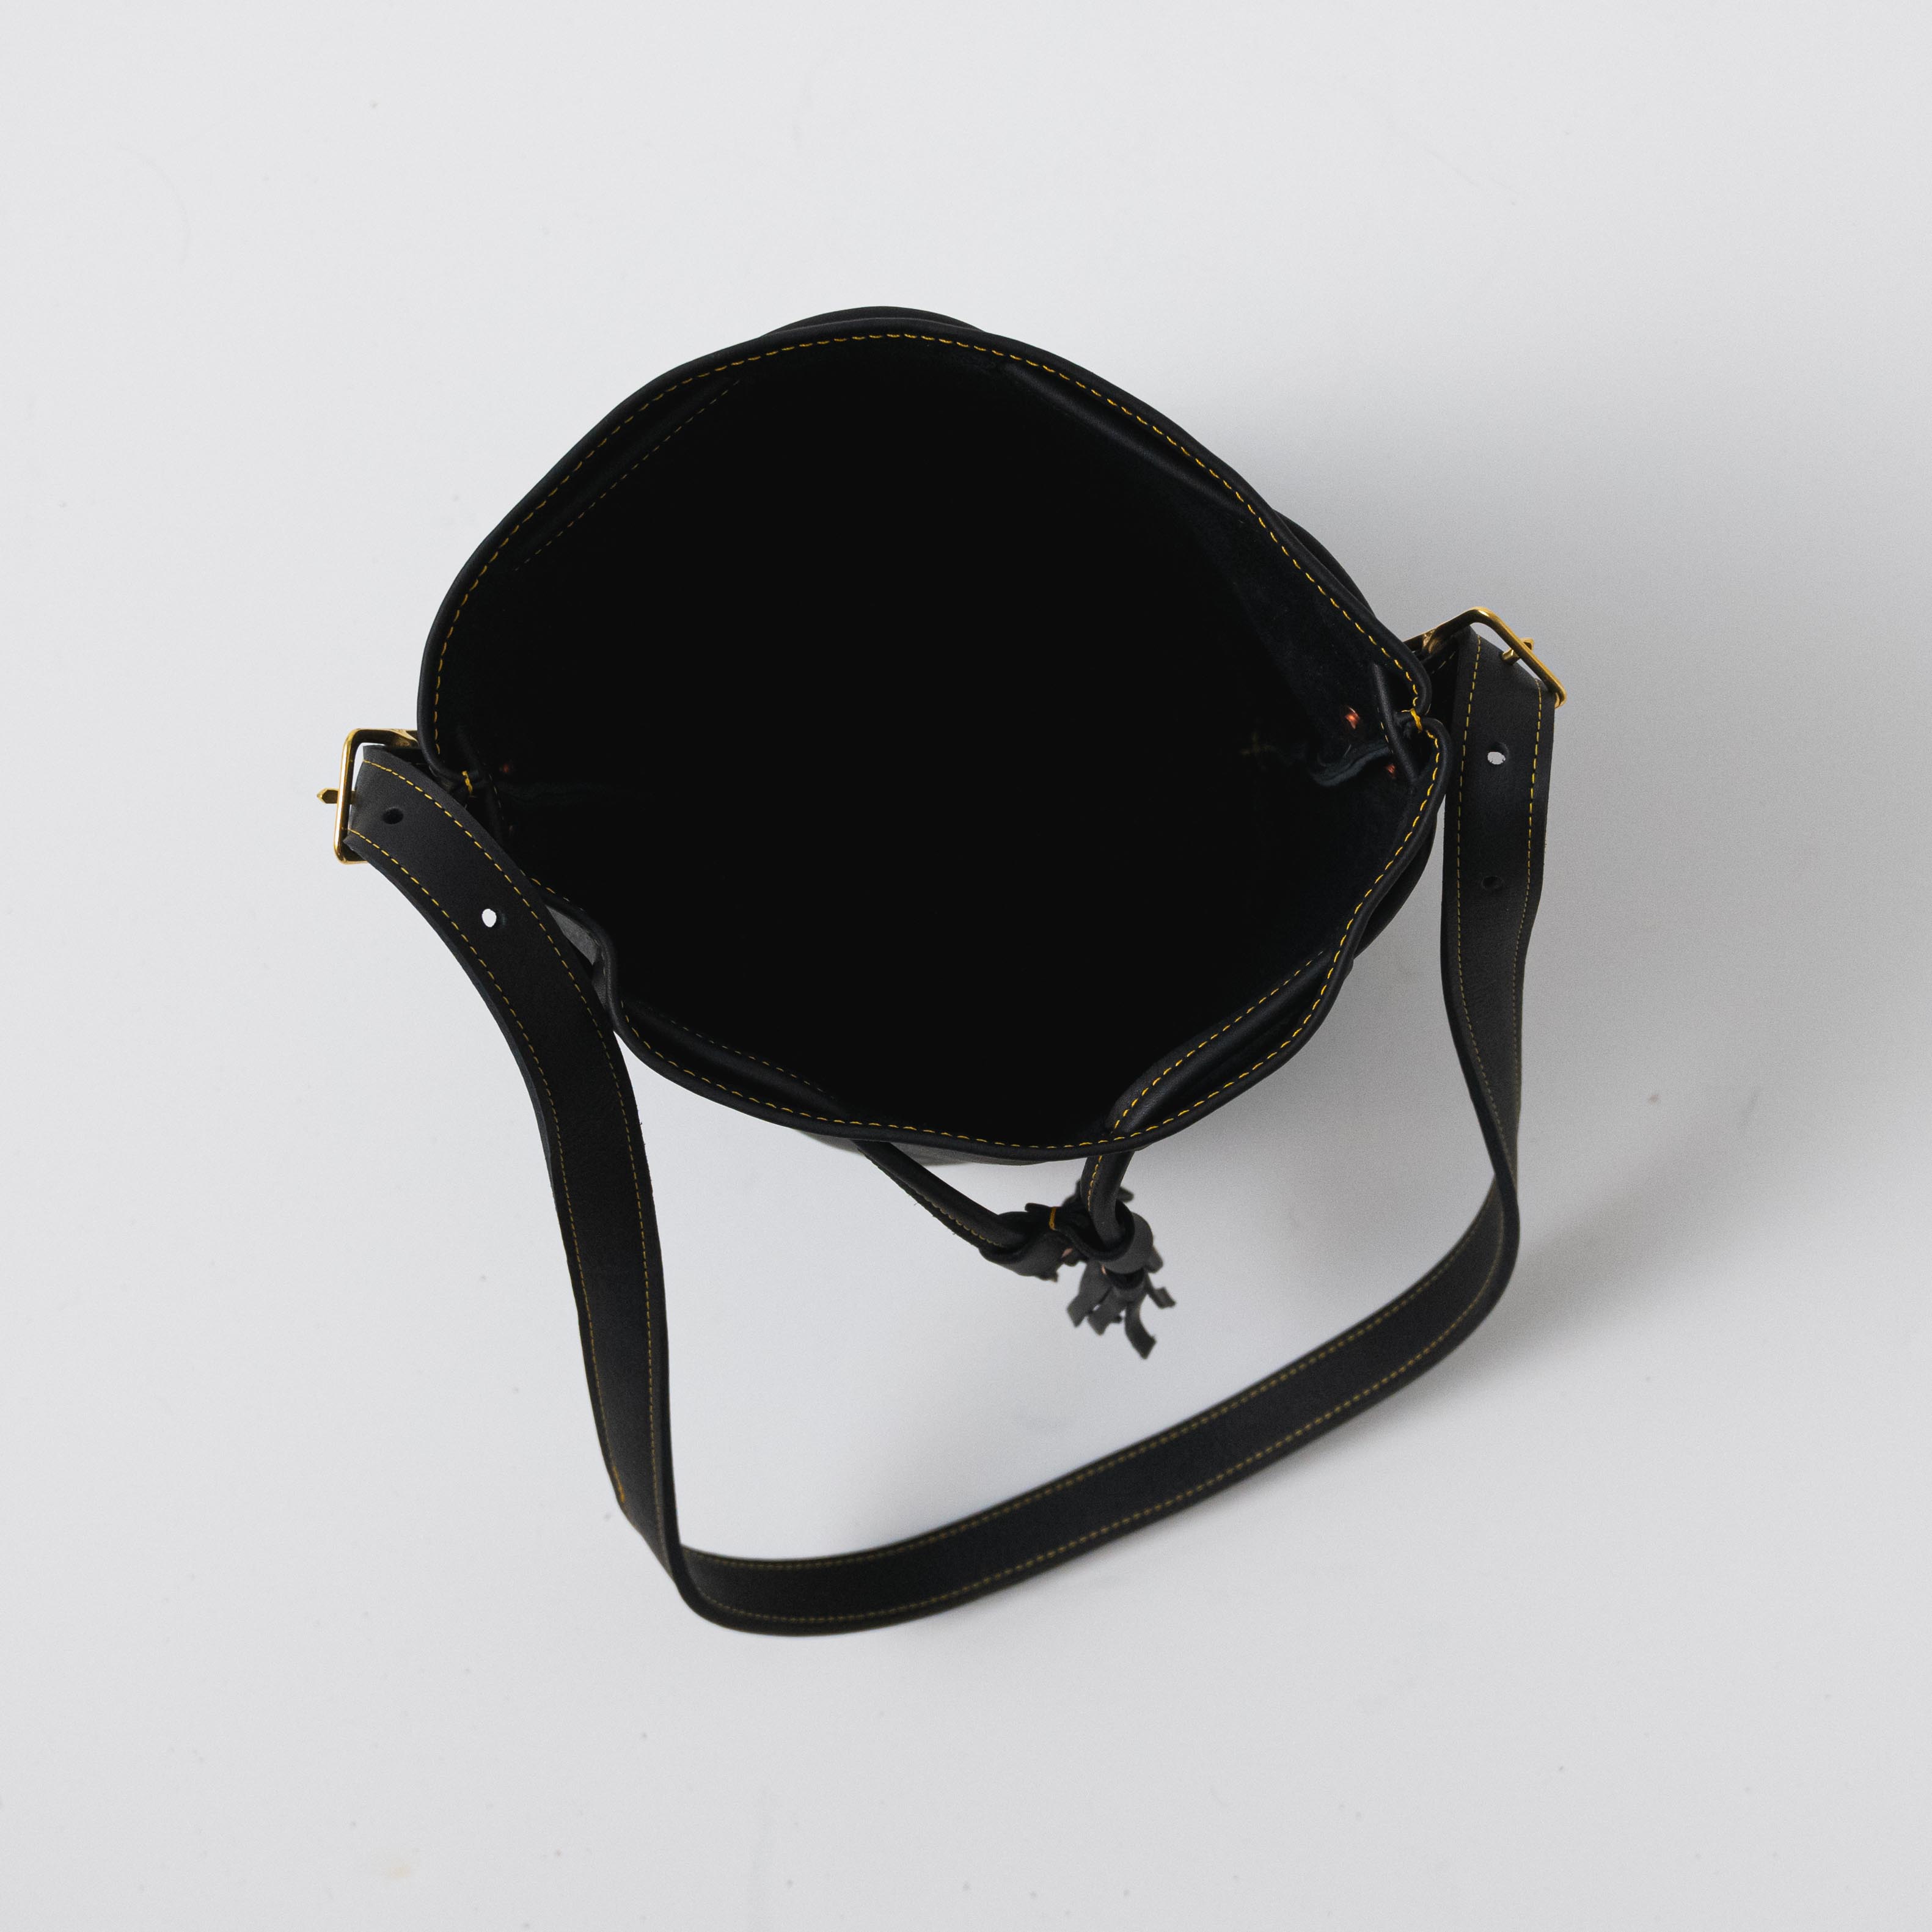 Black Cypress Bucket Bag